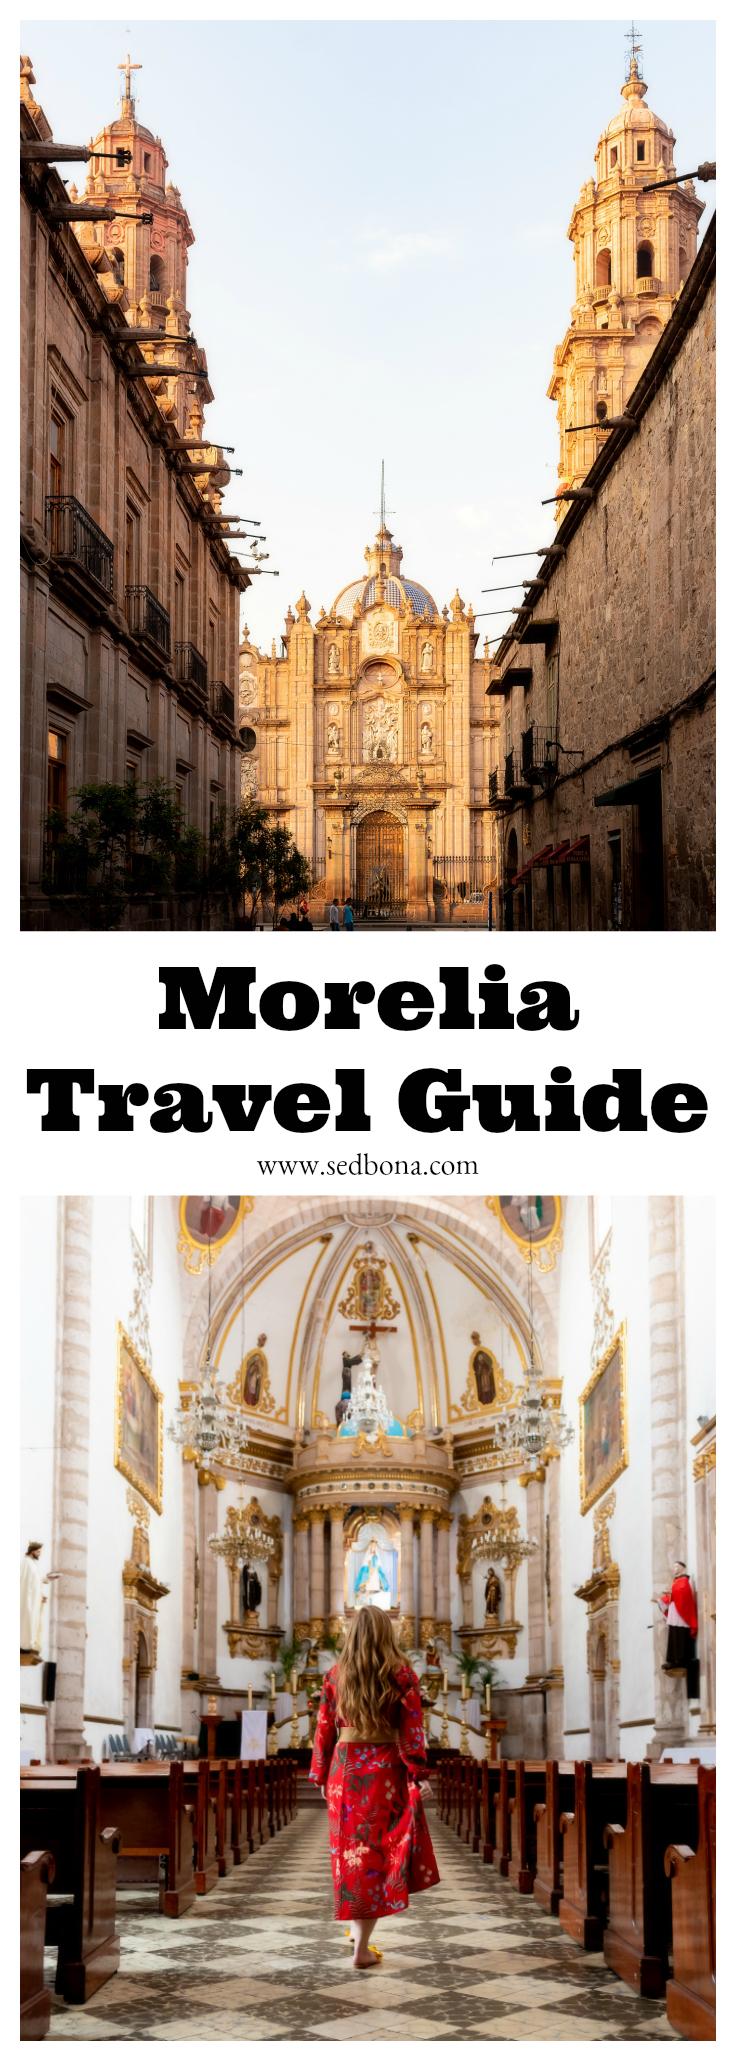 Morelia Travel Guide Sed Bona